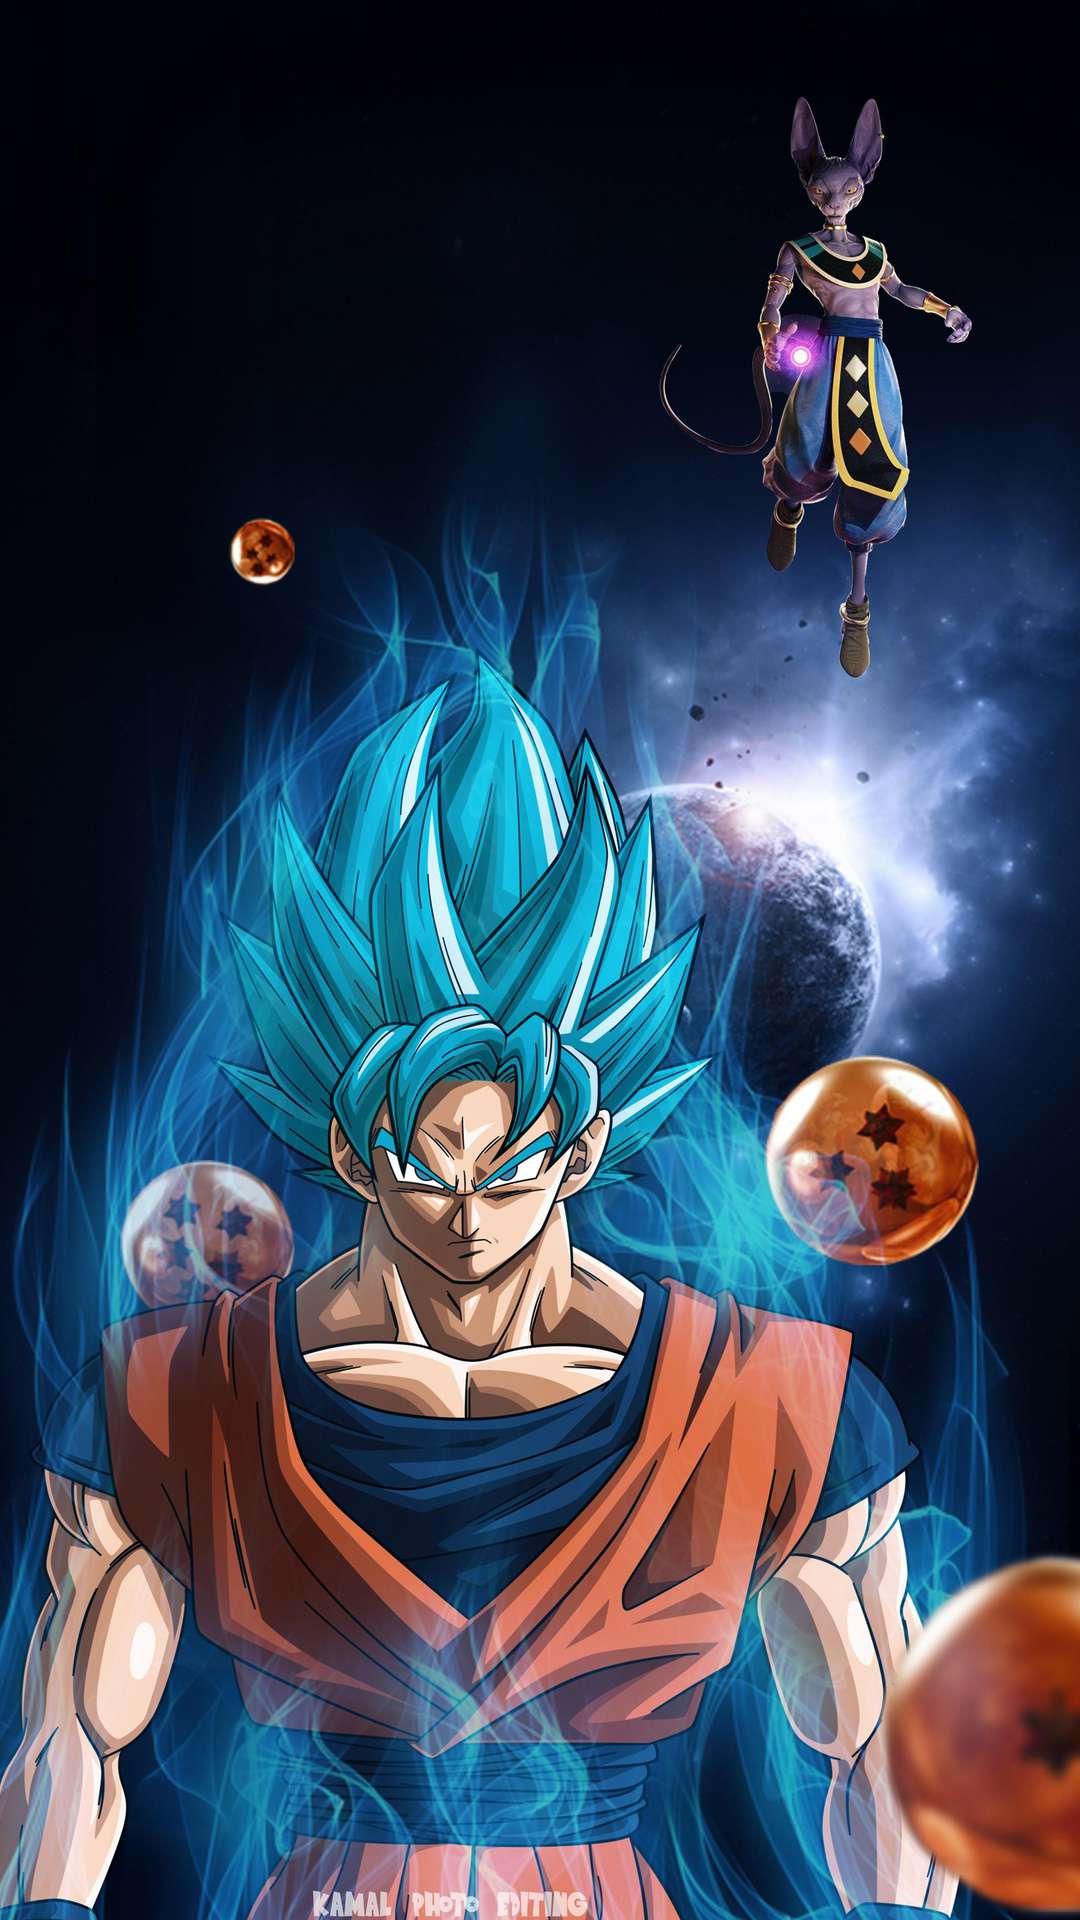 Goku Artwork by RasooliArtworks on DeviantArt